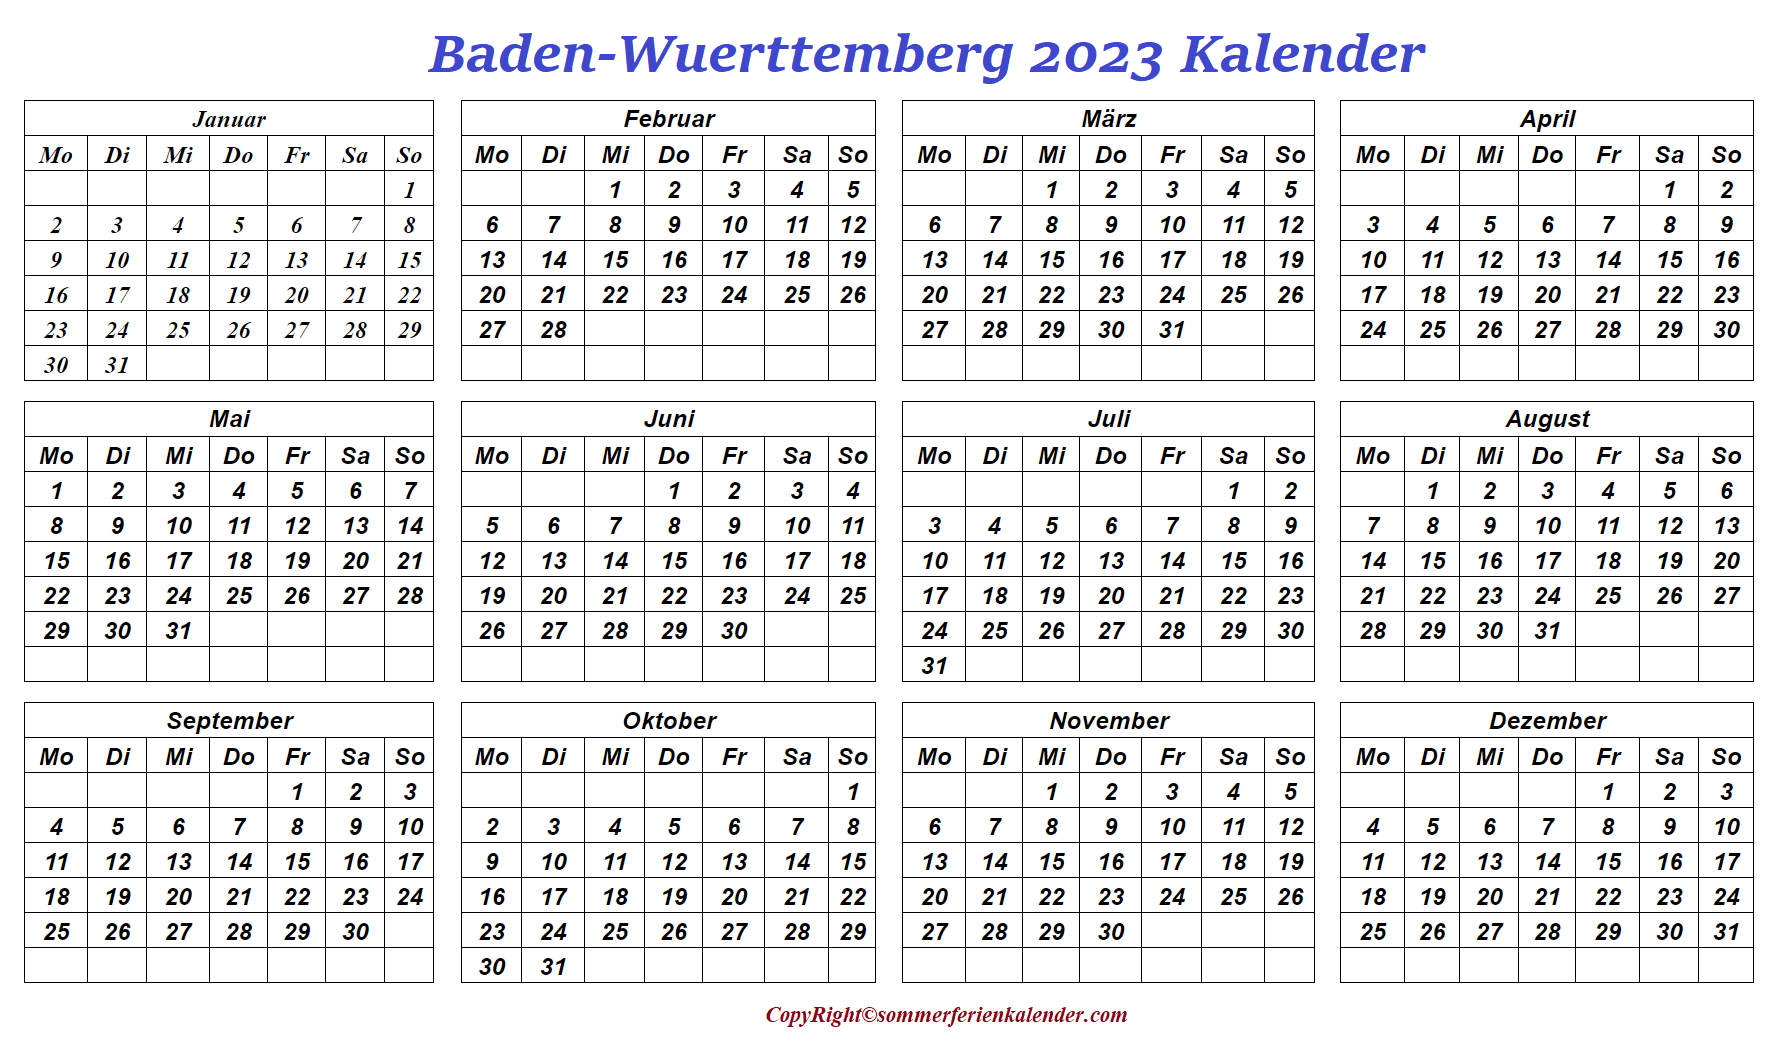 Baden-Wuerttemberg 2023 Kalender